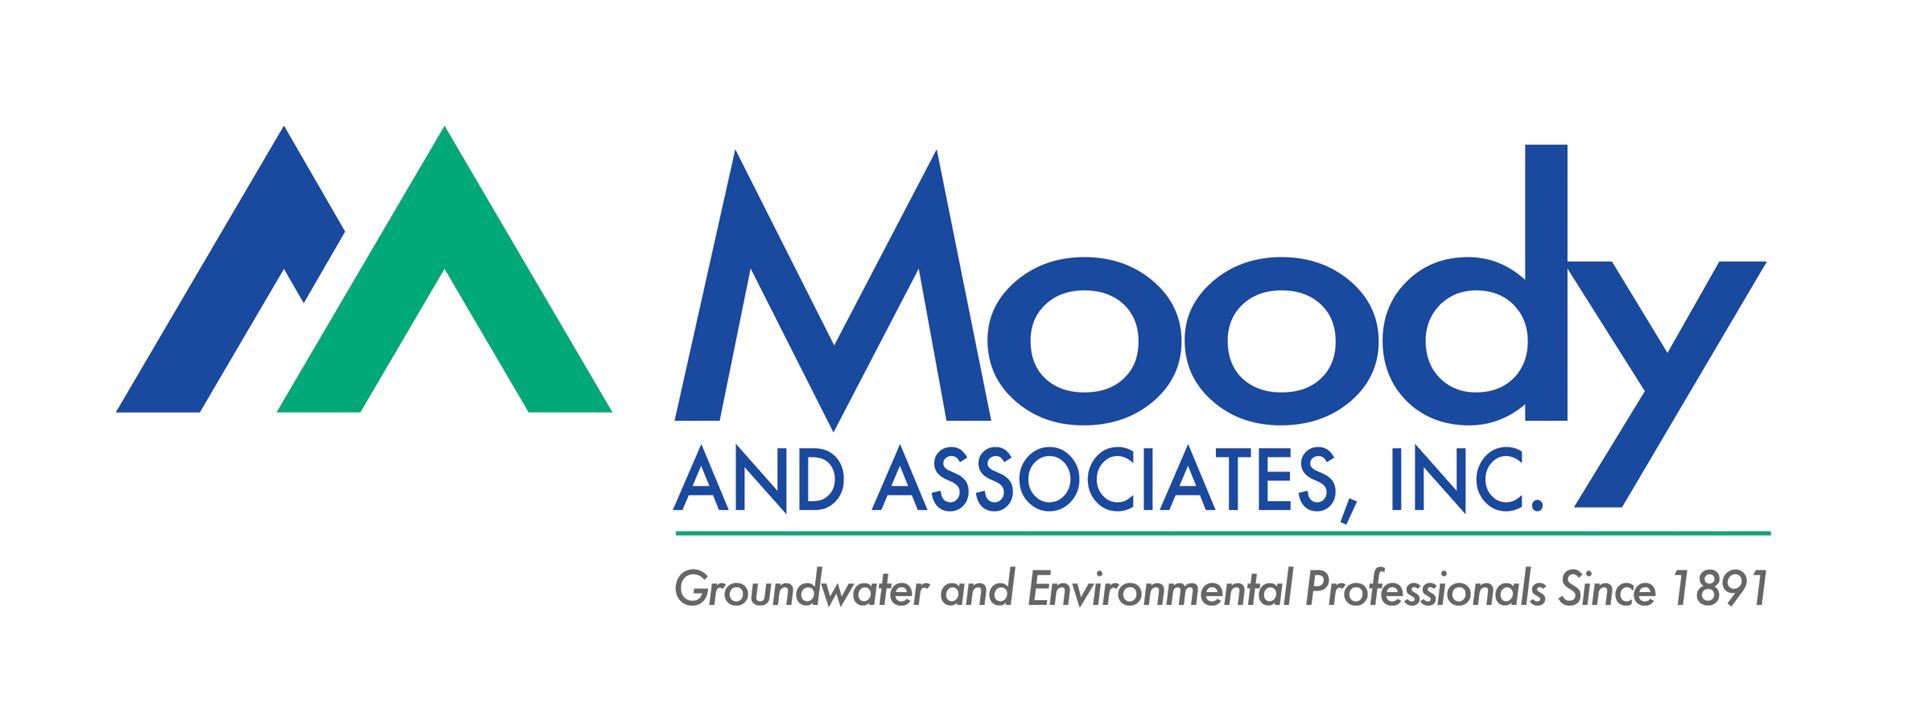 Moody and Associates, Inc. Logo